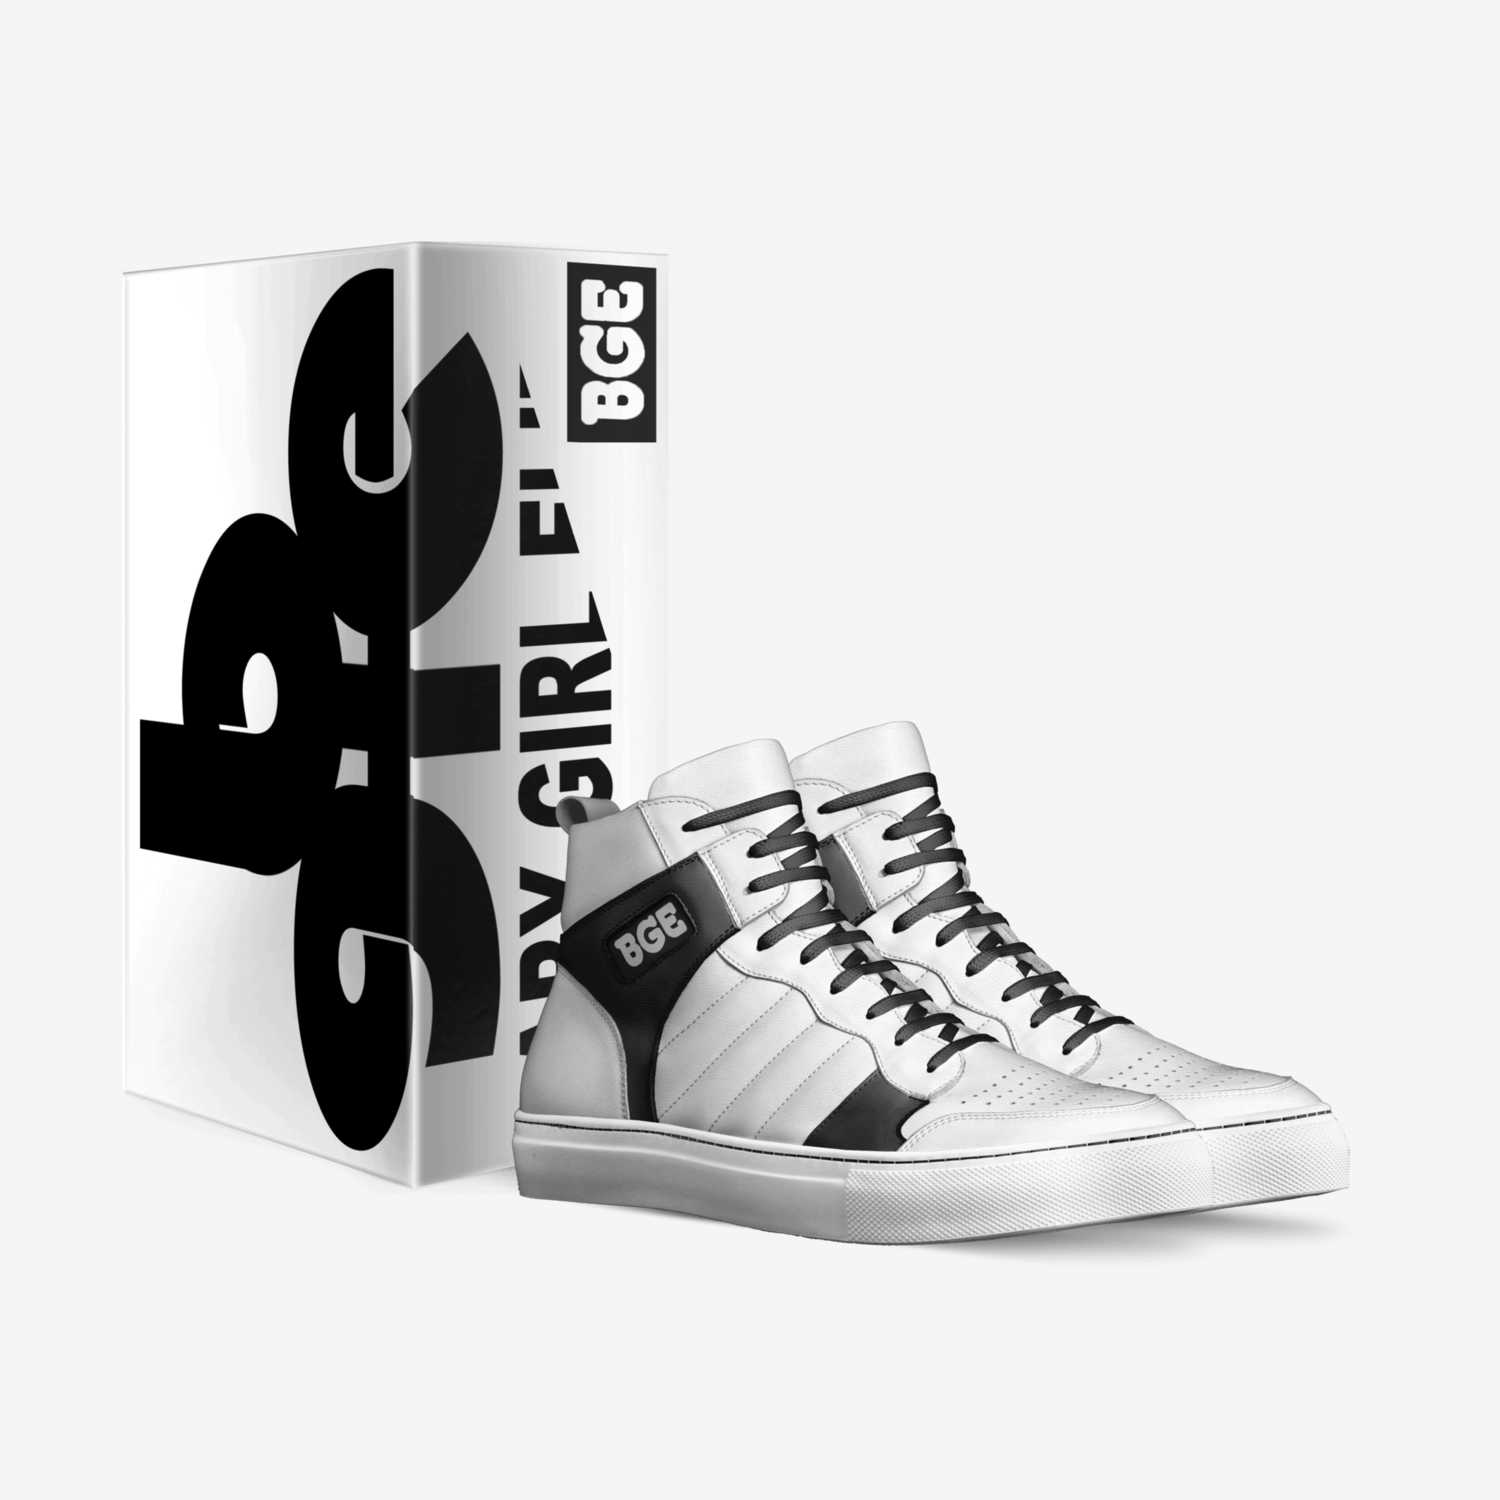 B-Dubs SJI Salto custom made in Italy shoes by Krishan Myrick | Box view